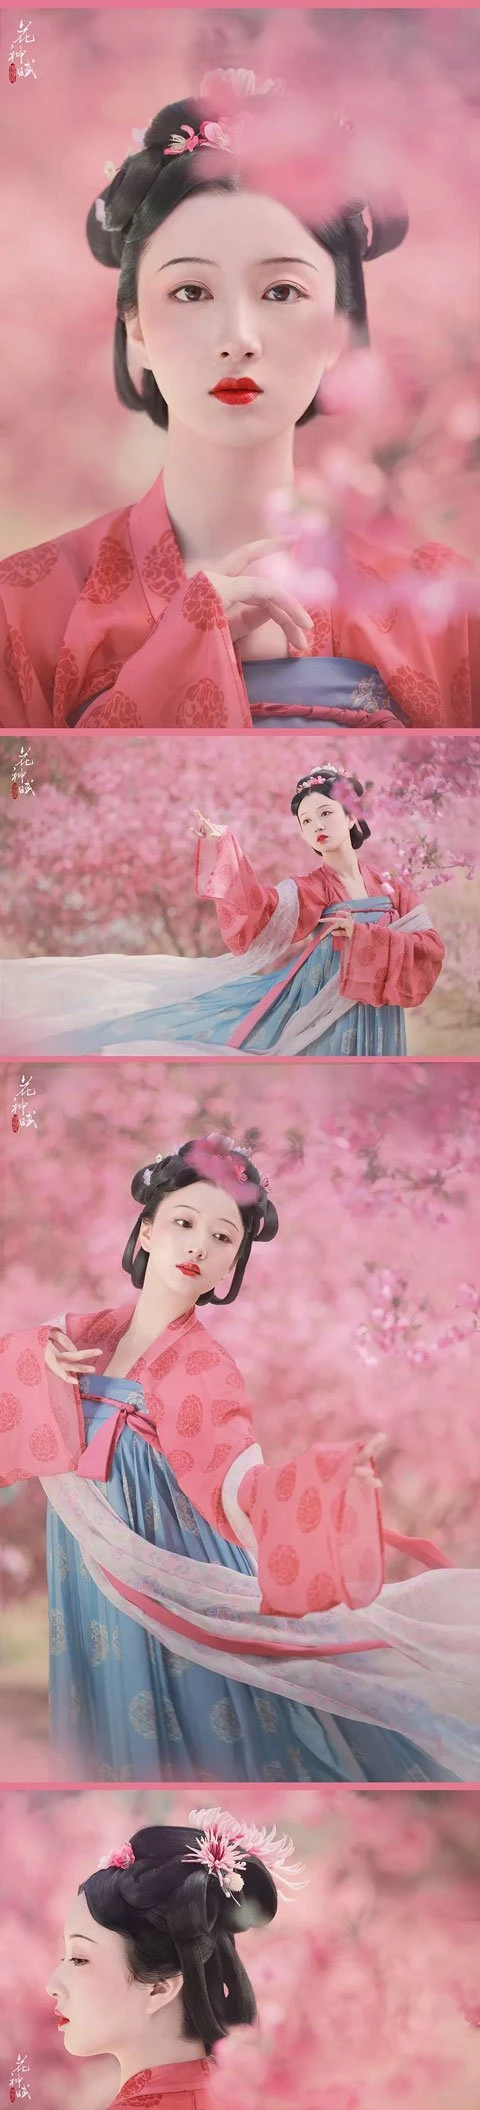 Ten Beauties Perform the Most Beautiful Hanfu